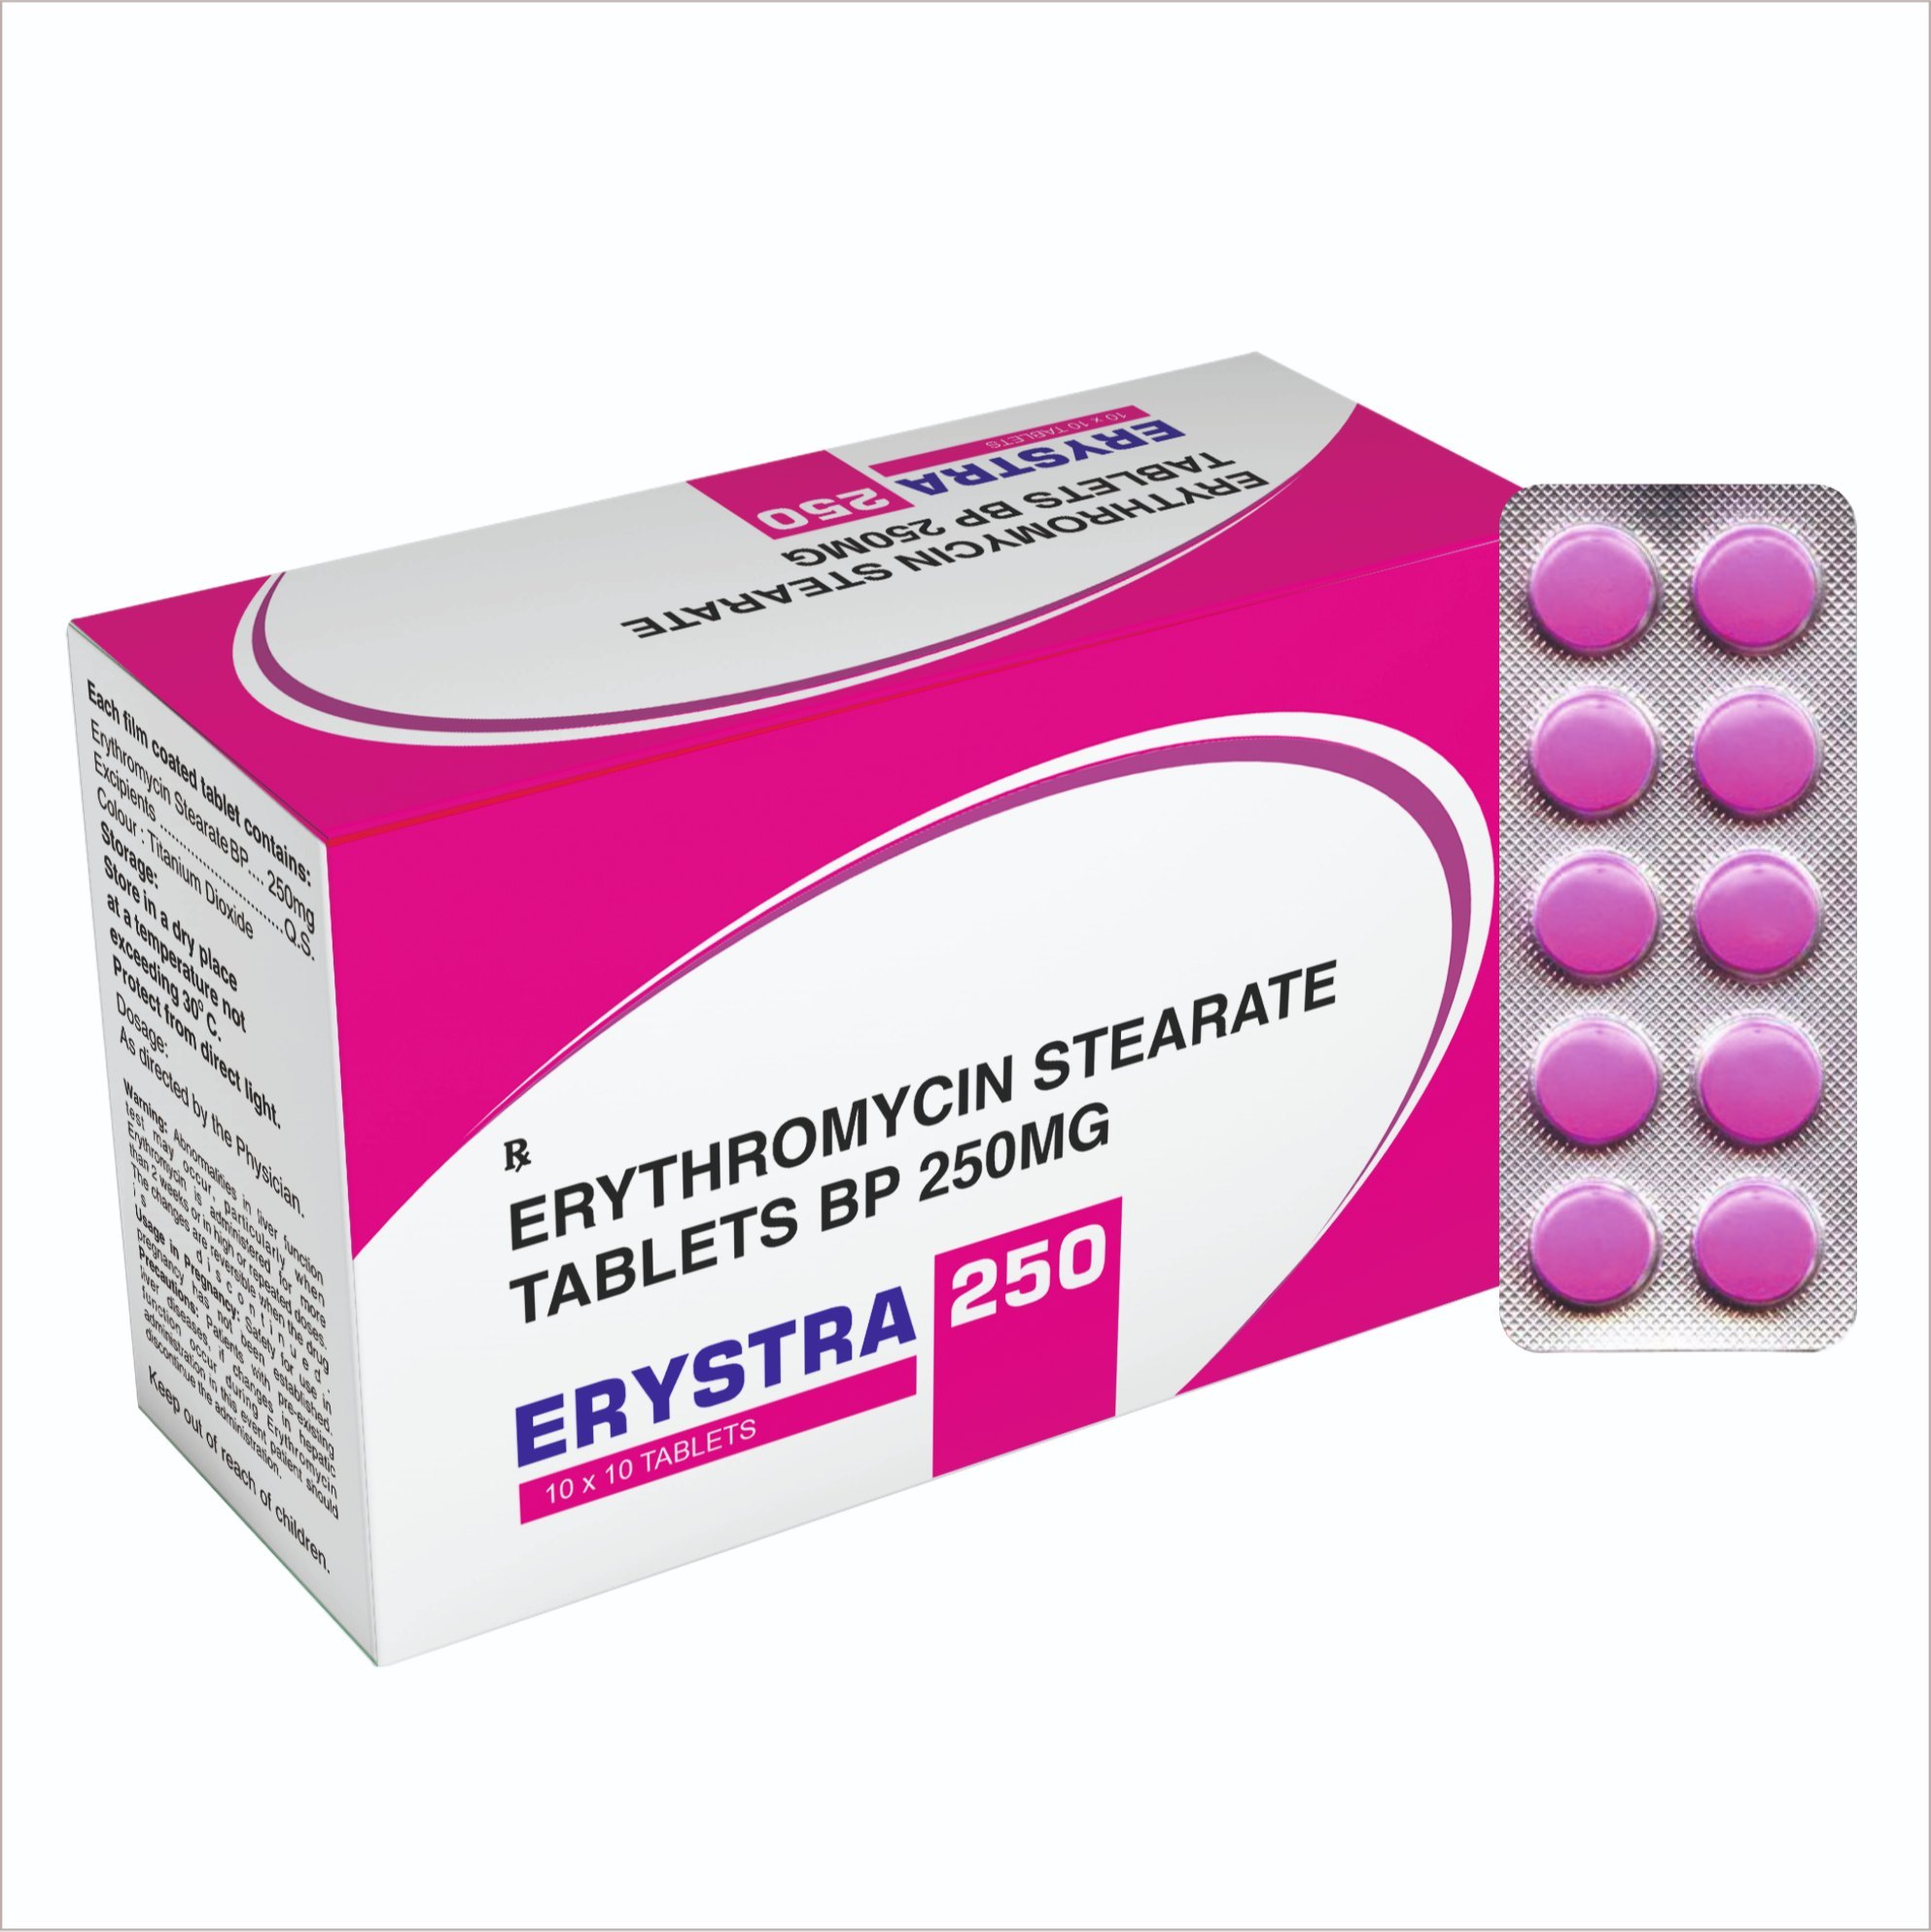 Erythromycin Stearate